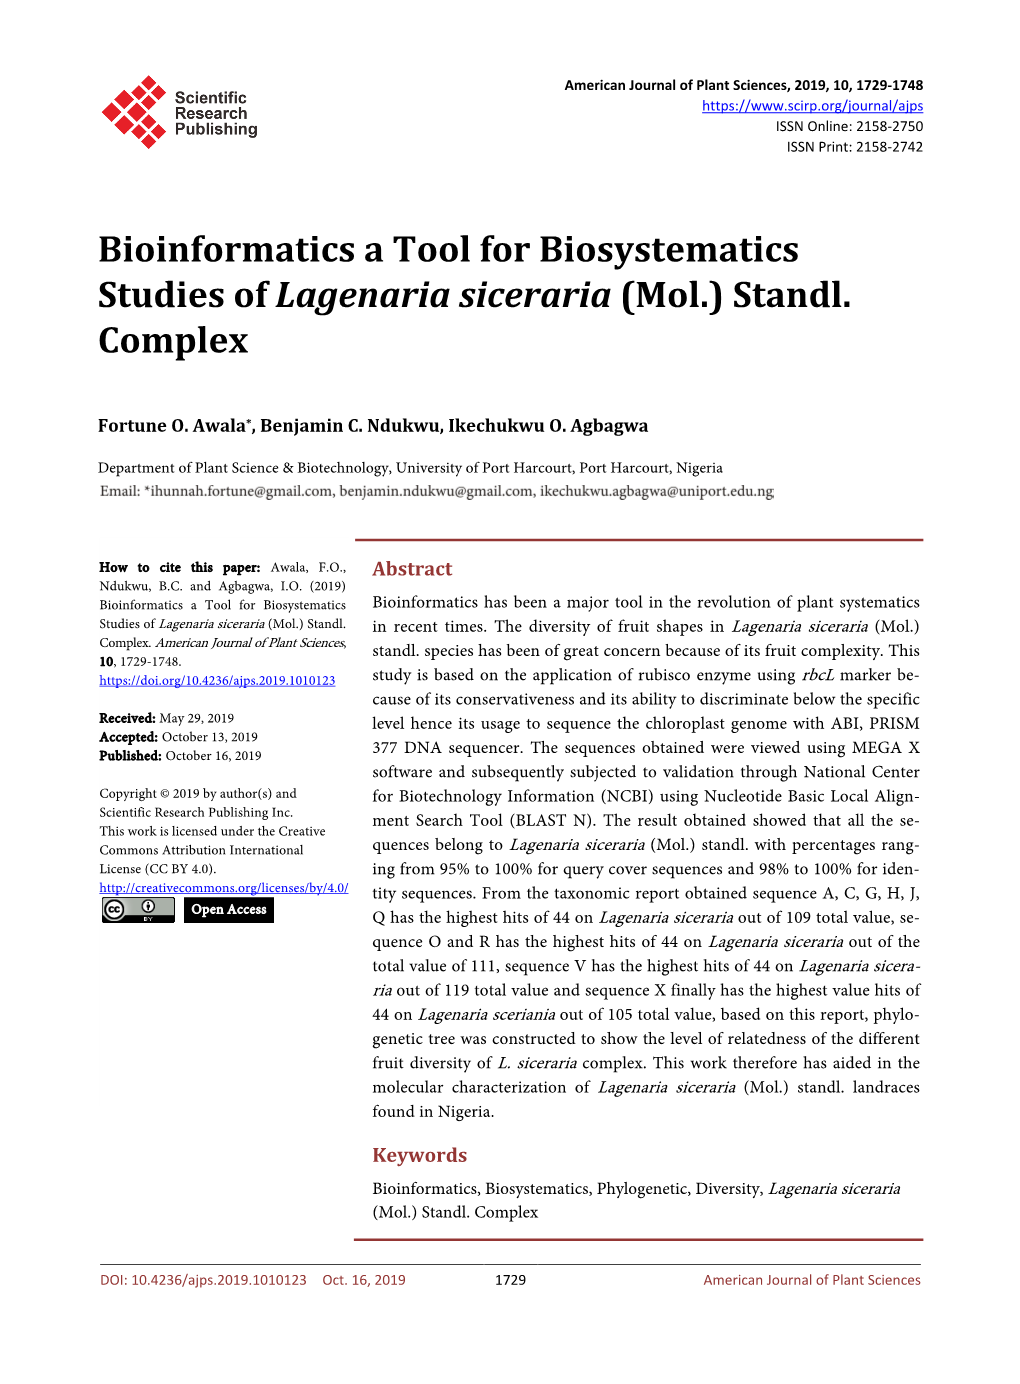 Bioinformatics a Tool for Biosystematics Studies of Lagenaria Siceraria (Mol.) Standl